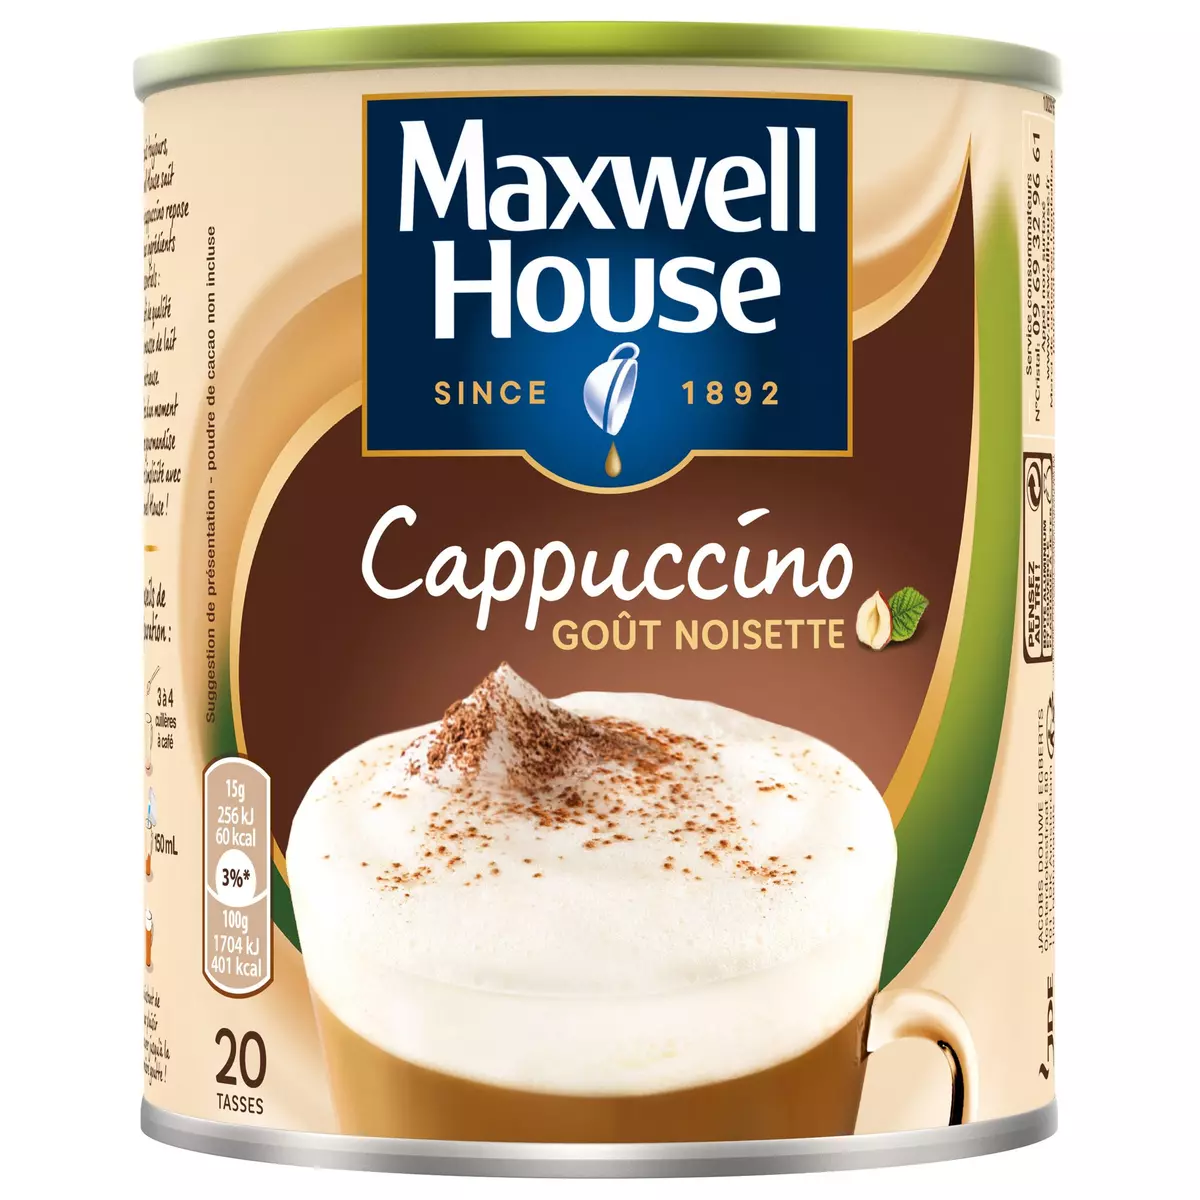 MAXWELL HOUSE Cappuccino café soluble goût noisettes 305g